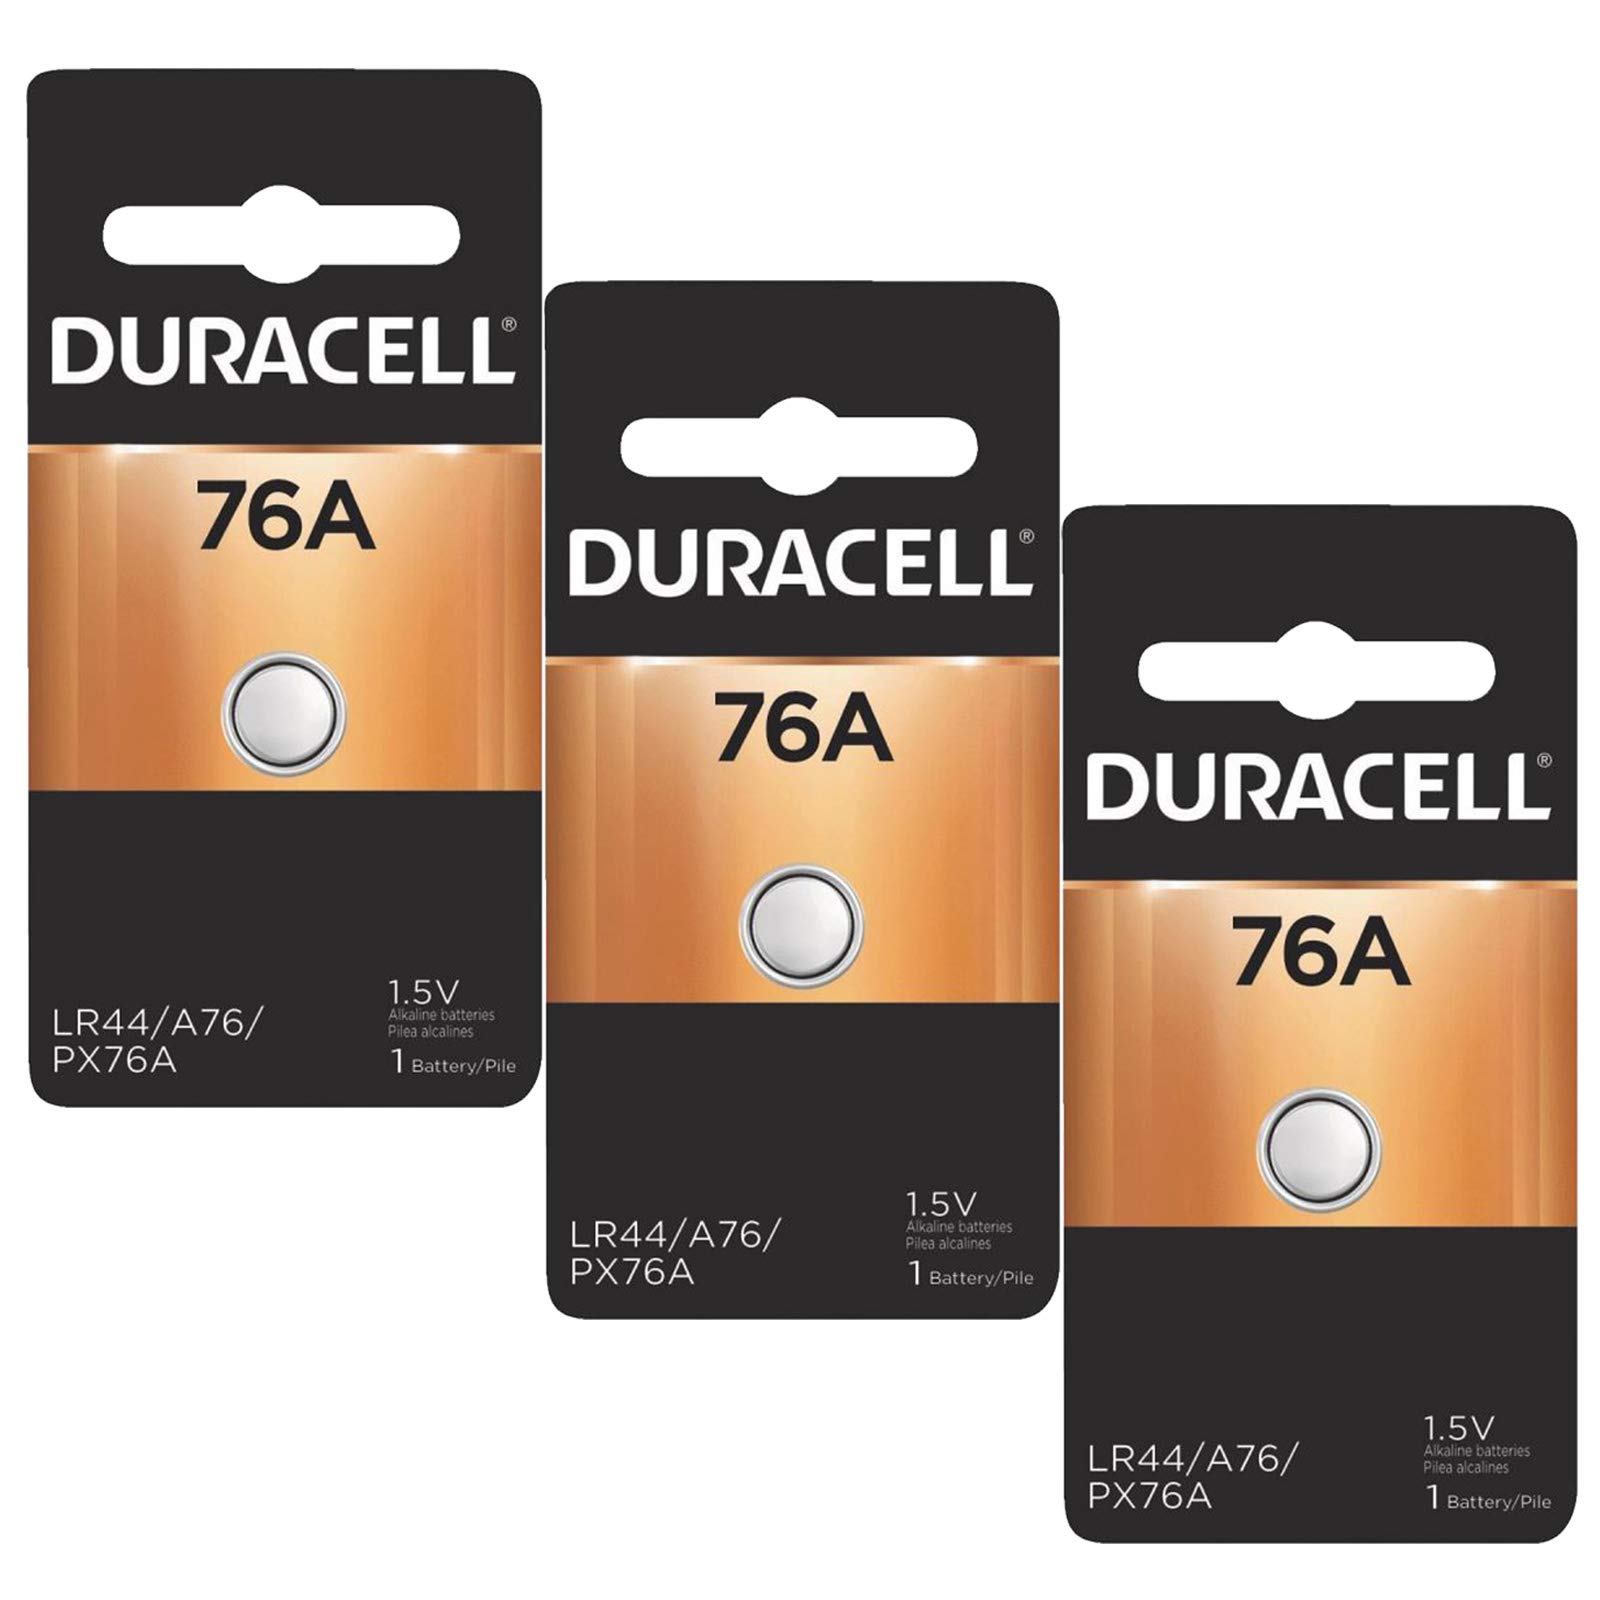 3x Duracell 76A 1.5V Alkaline Battery Replacement LR44,CR44,SR44,AG13,A76,PX76